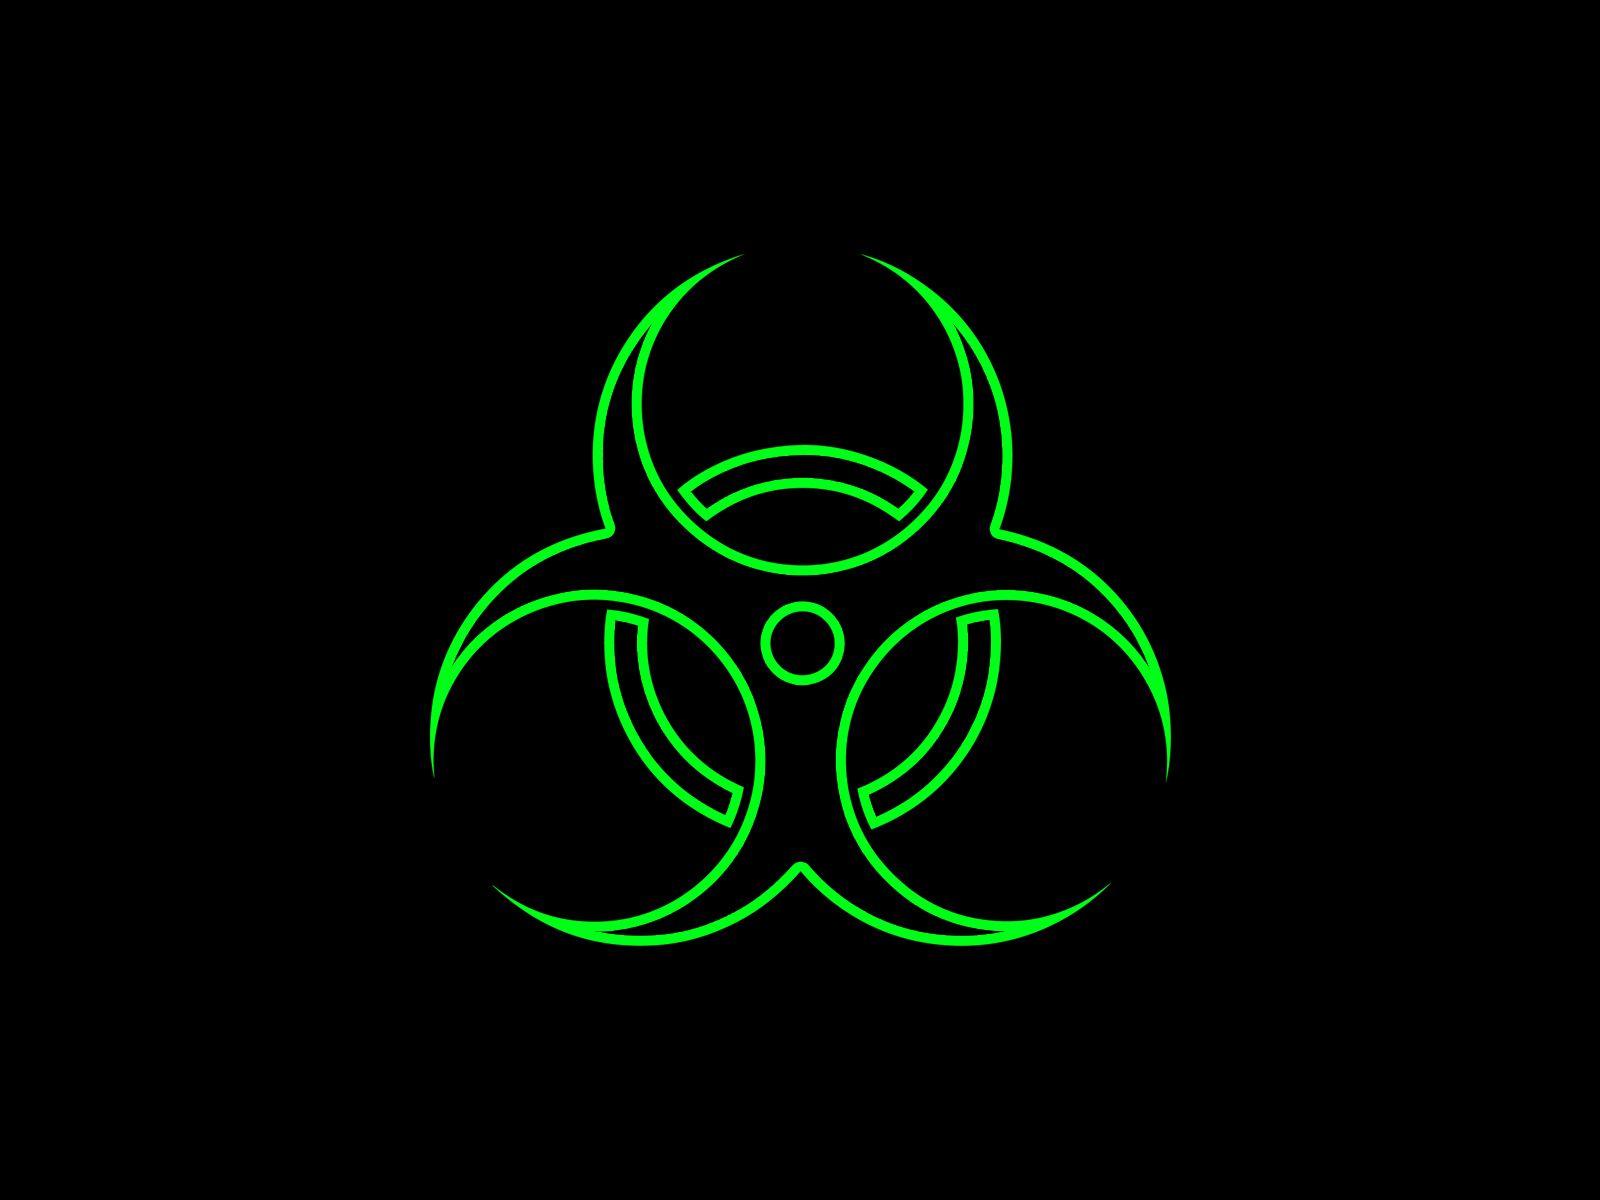 Wallpapers For > Biohazard Symbol Wallpapers